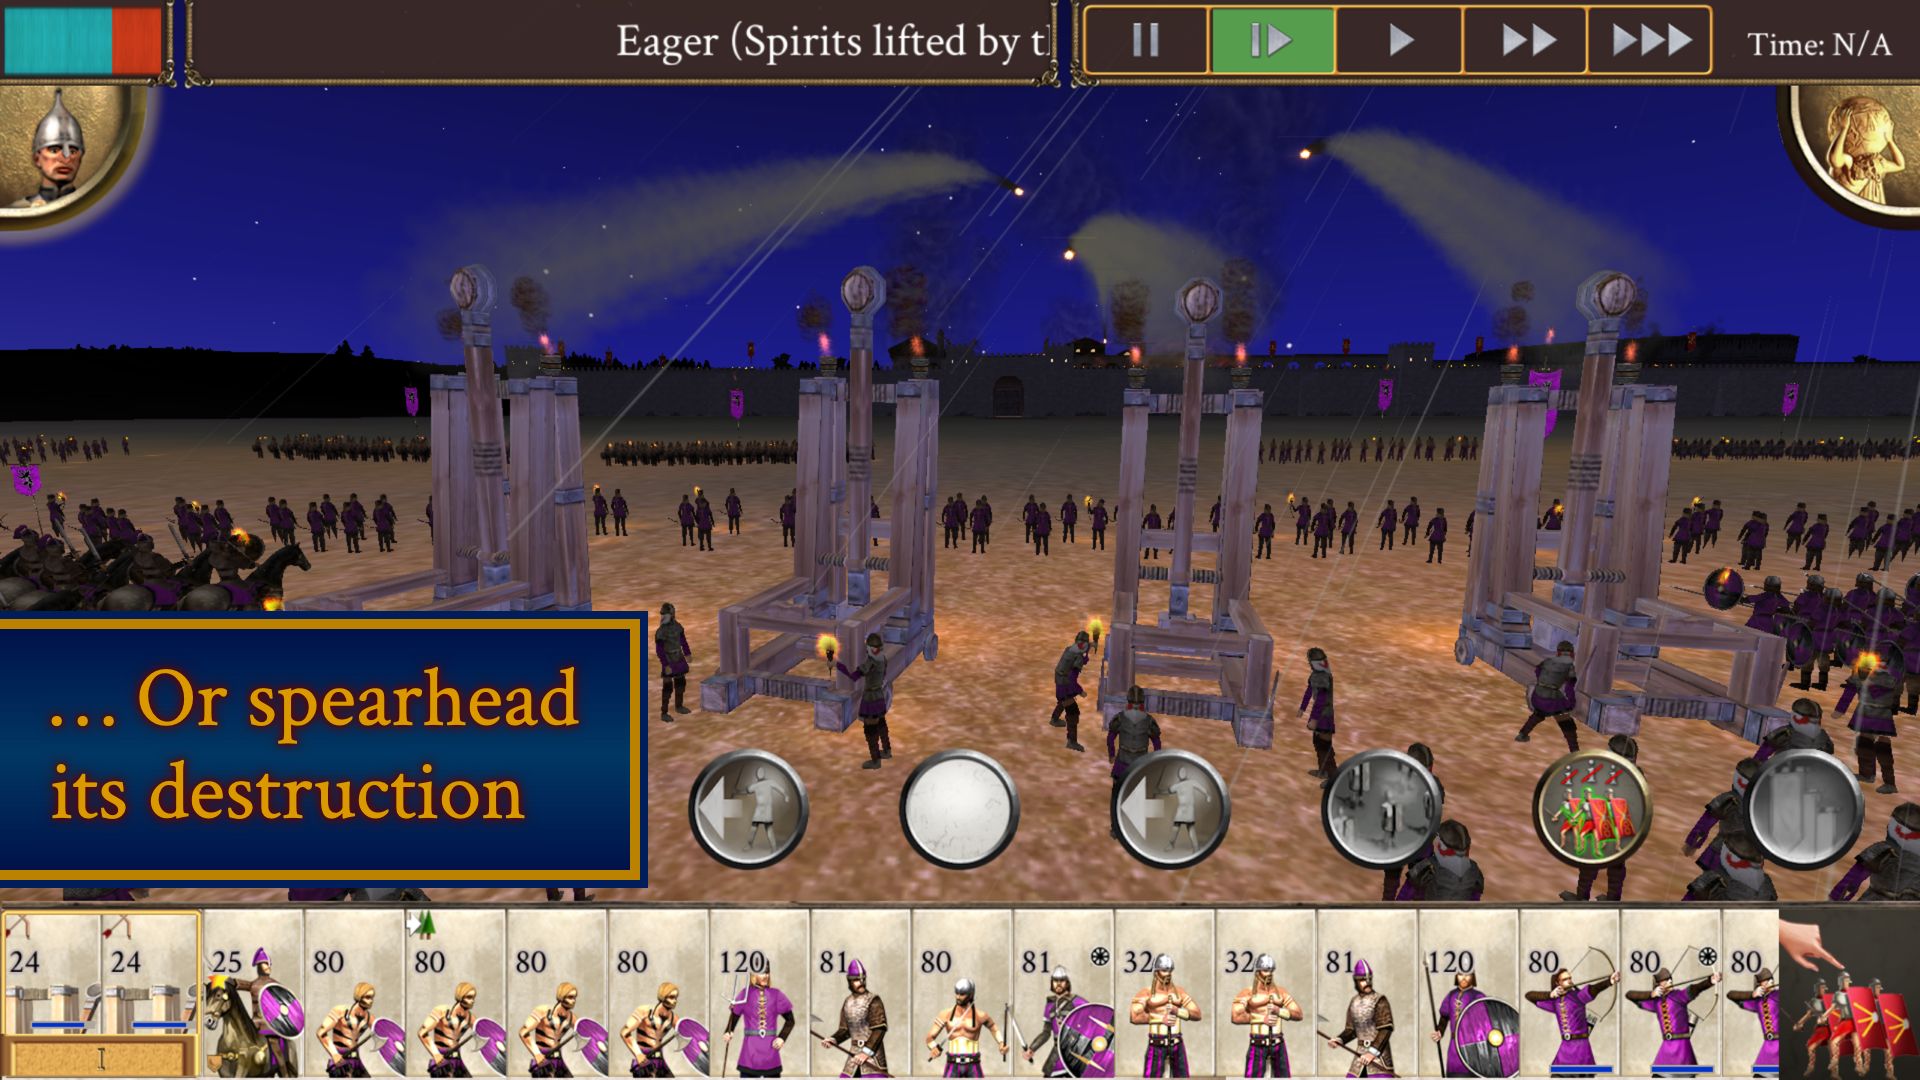 ROME: Total War - Barbarian Invasion screenshot 1